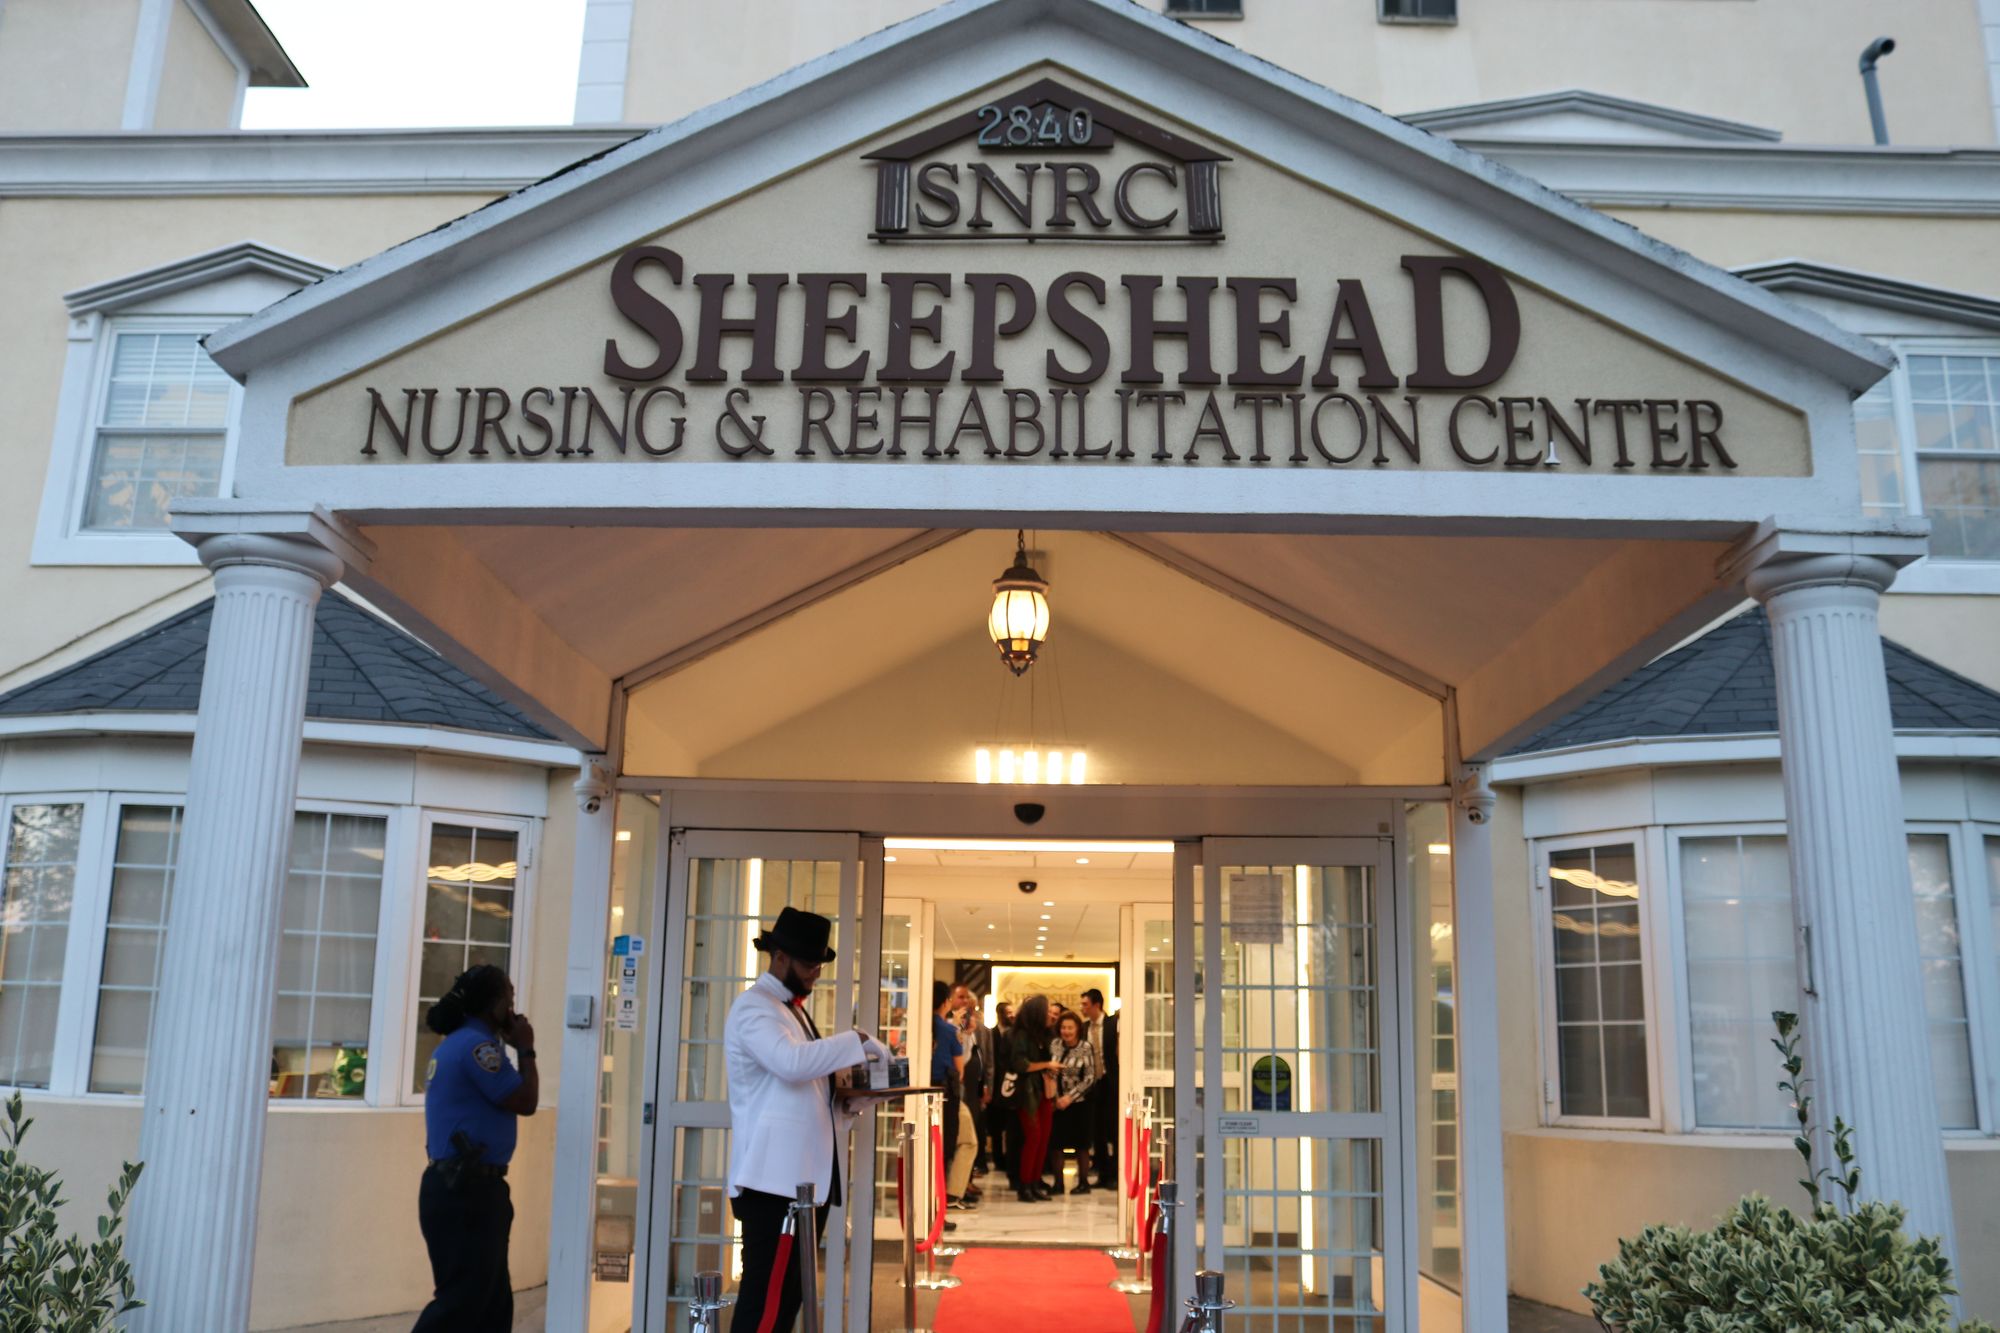 Sheepshead Bay Nursing & Rehabilitation Center Celebrates 50 Years With A Renovated Facility